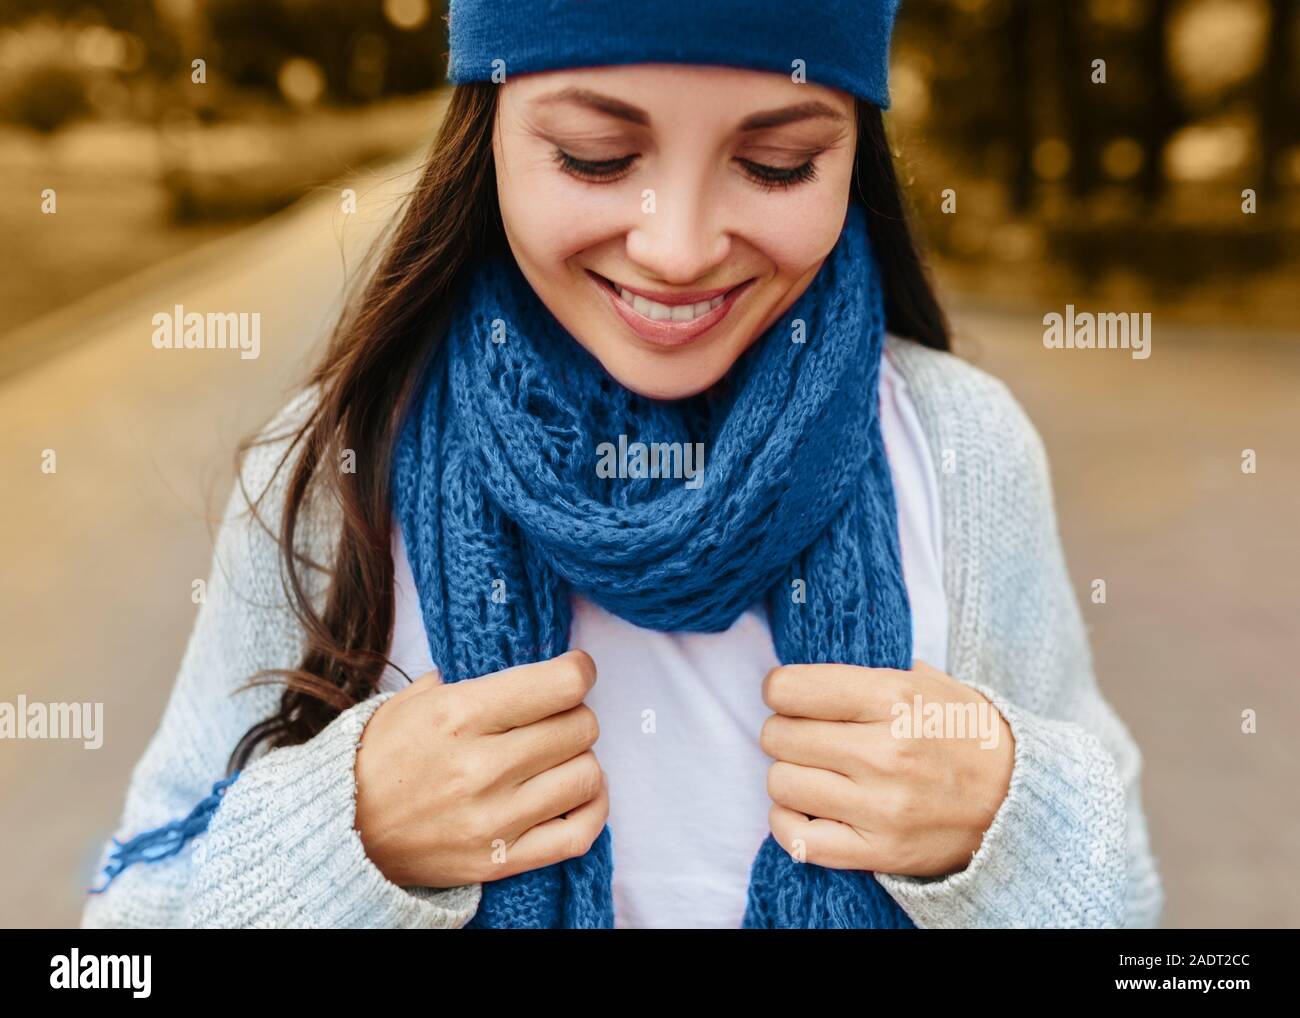 2019 colores de moda fotografías e imágenes de alta resolución - Alamy